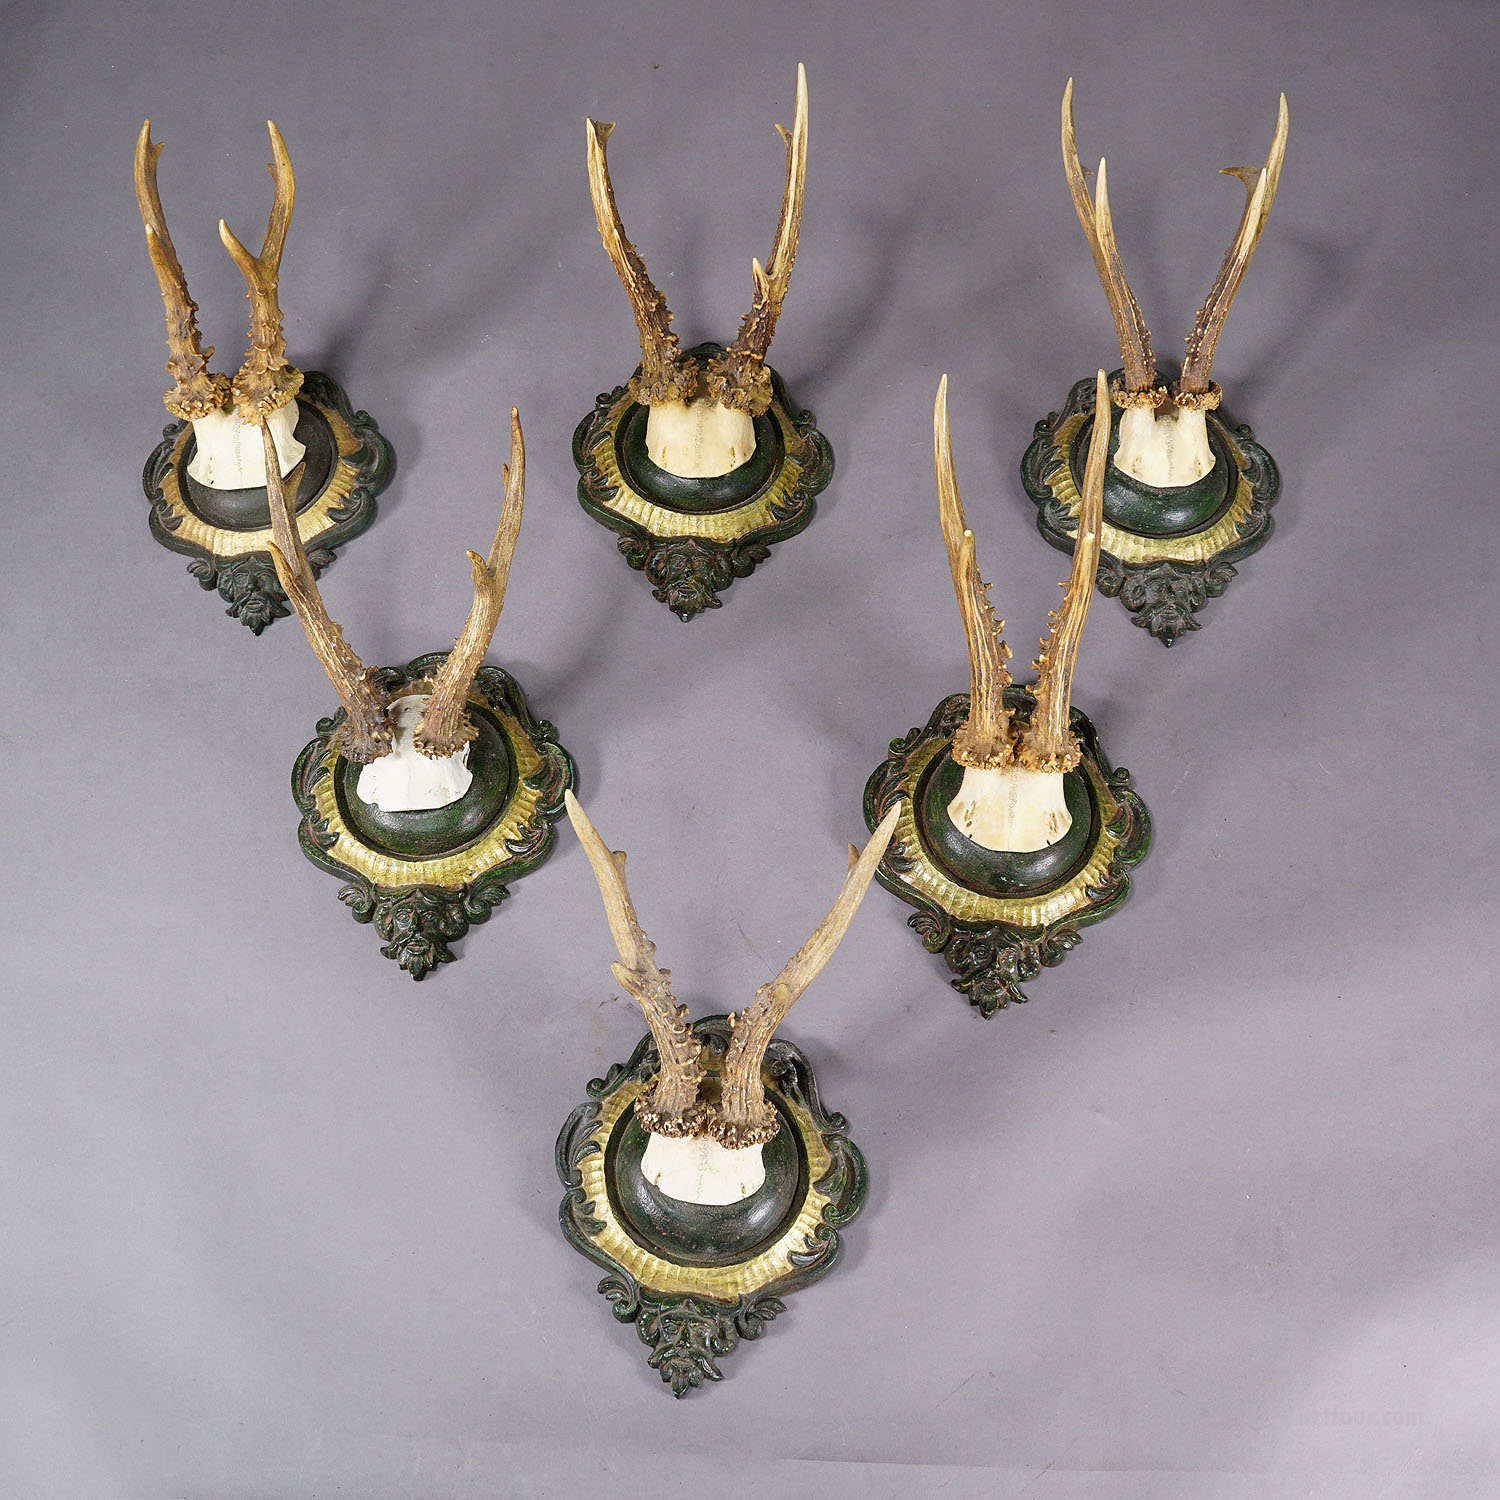 Six Large Vintage Roe Deer Trophies on Plaster Plaques Germany ca. 1960s